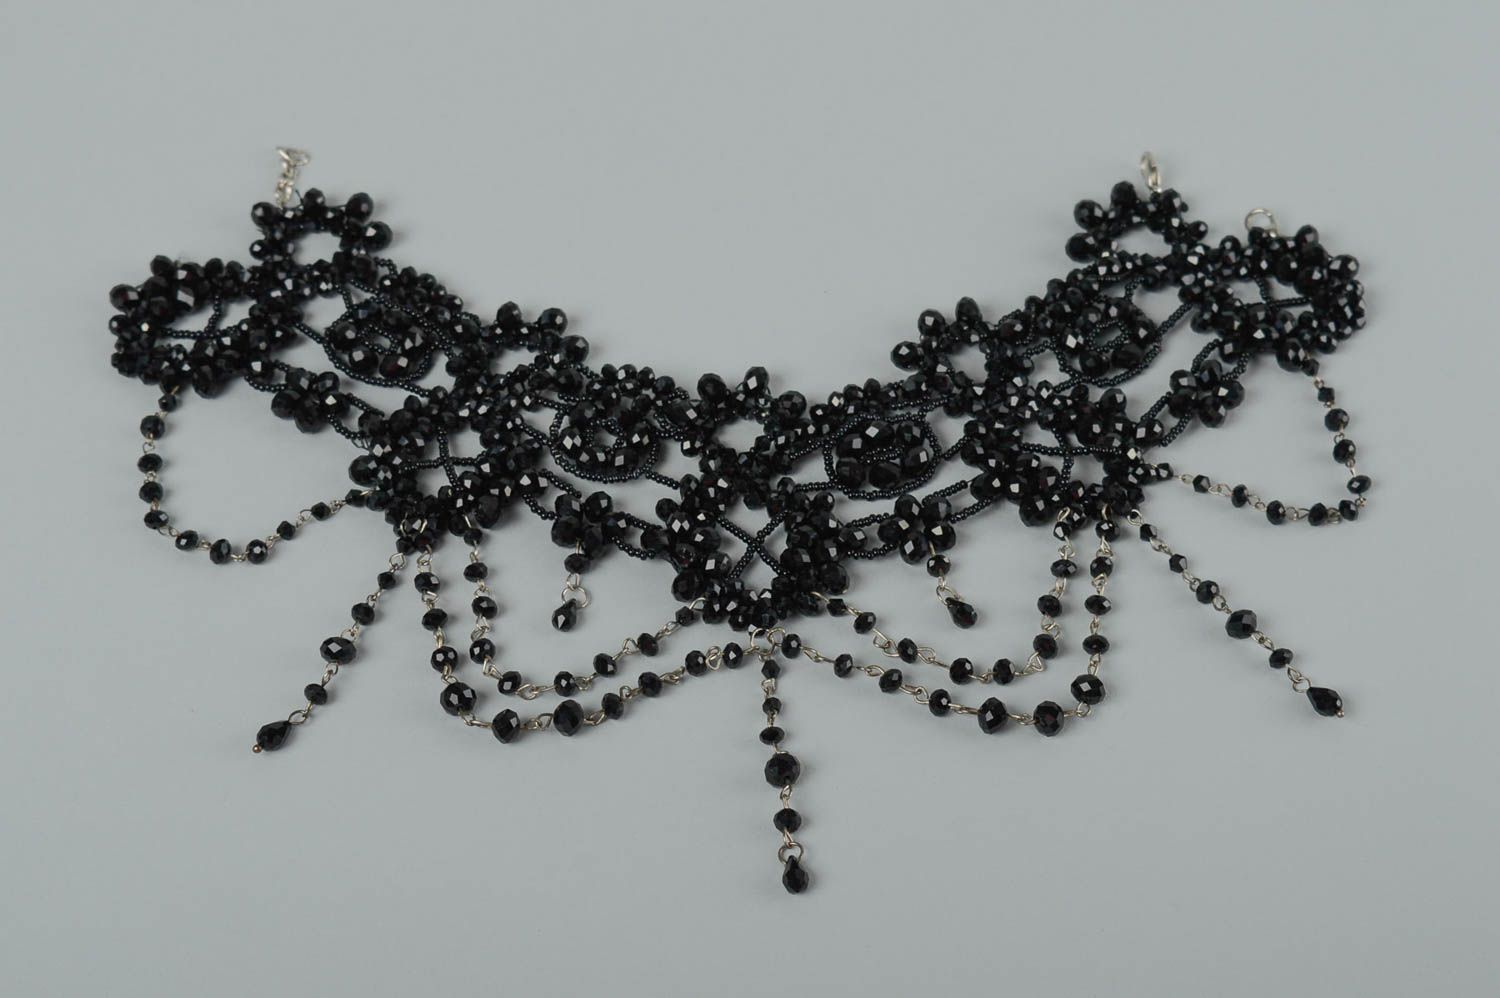 Unusual handmade beaded necklace fashion accessories artisan jewelry designs photo 2